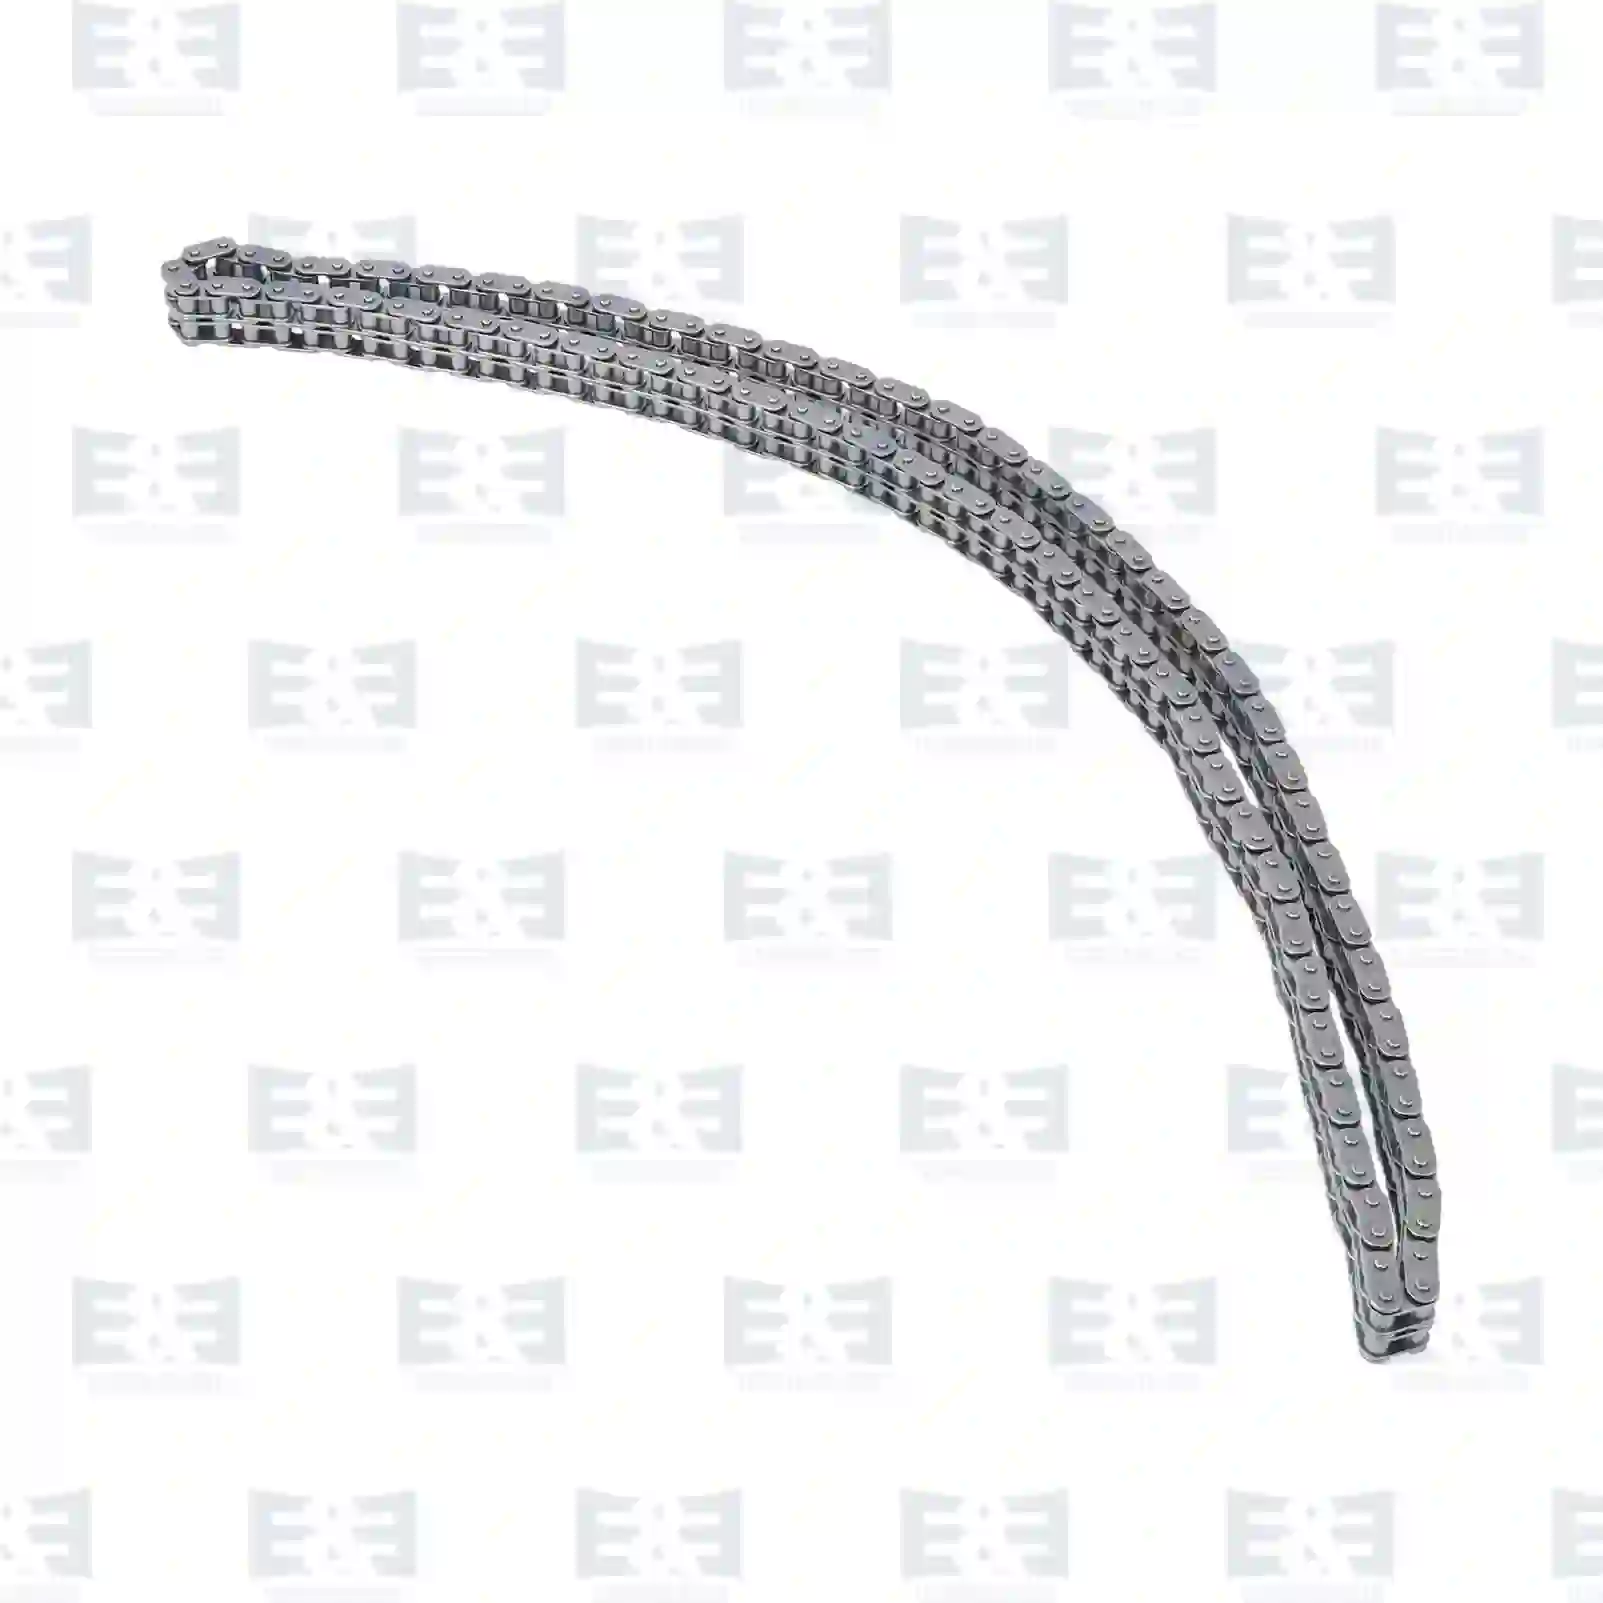  Timing chain || E&E Truck Spare Parts | Truck Spare Parts, Auotomotive Spare Parts